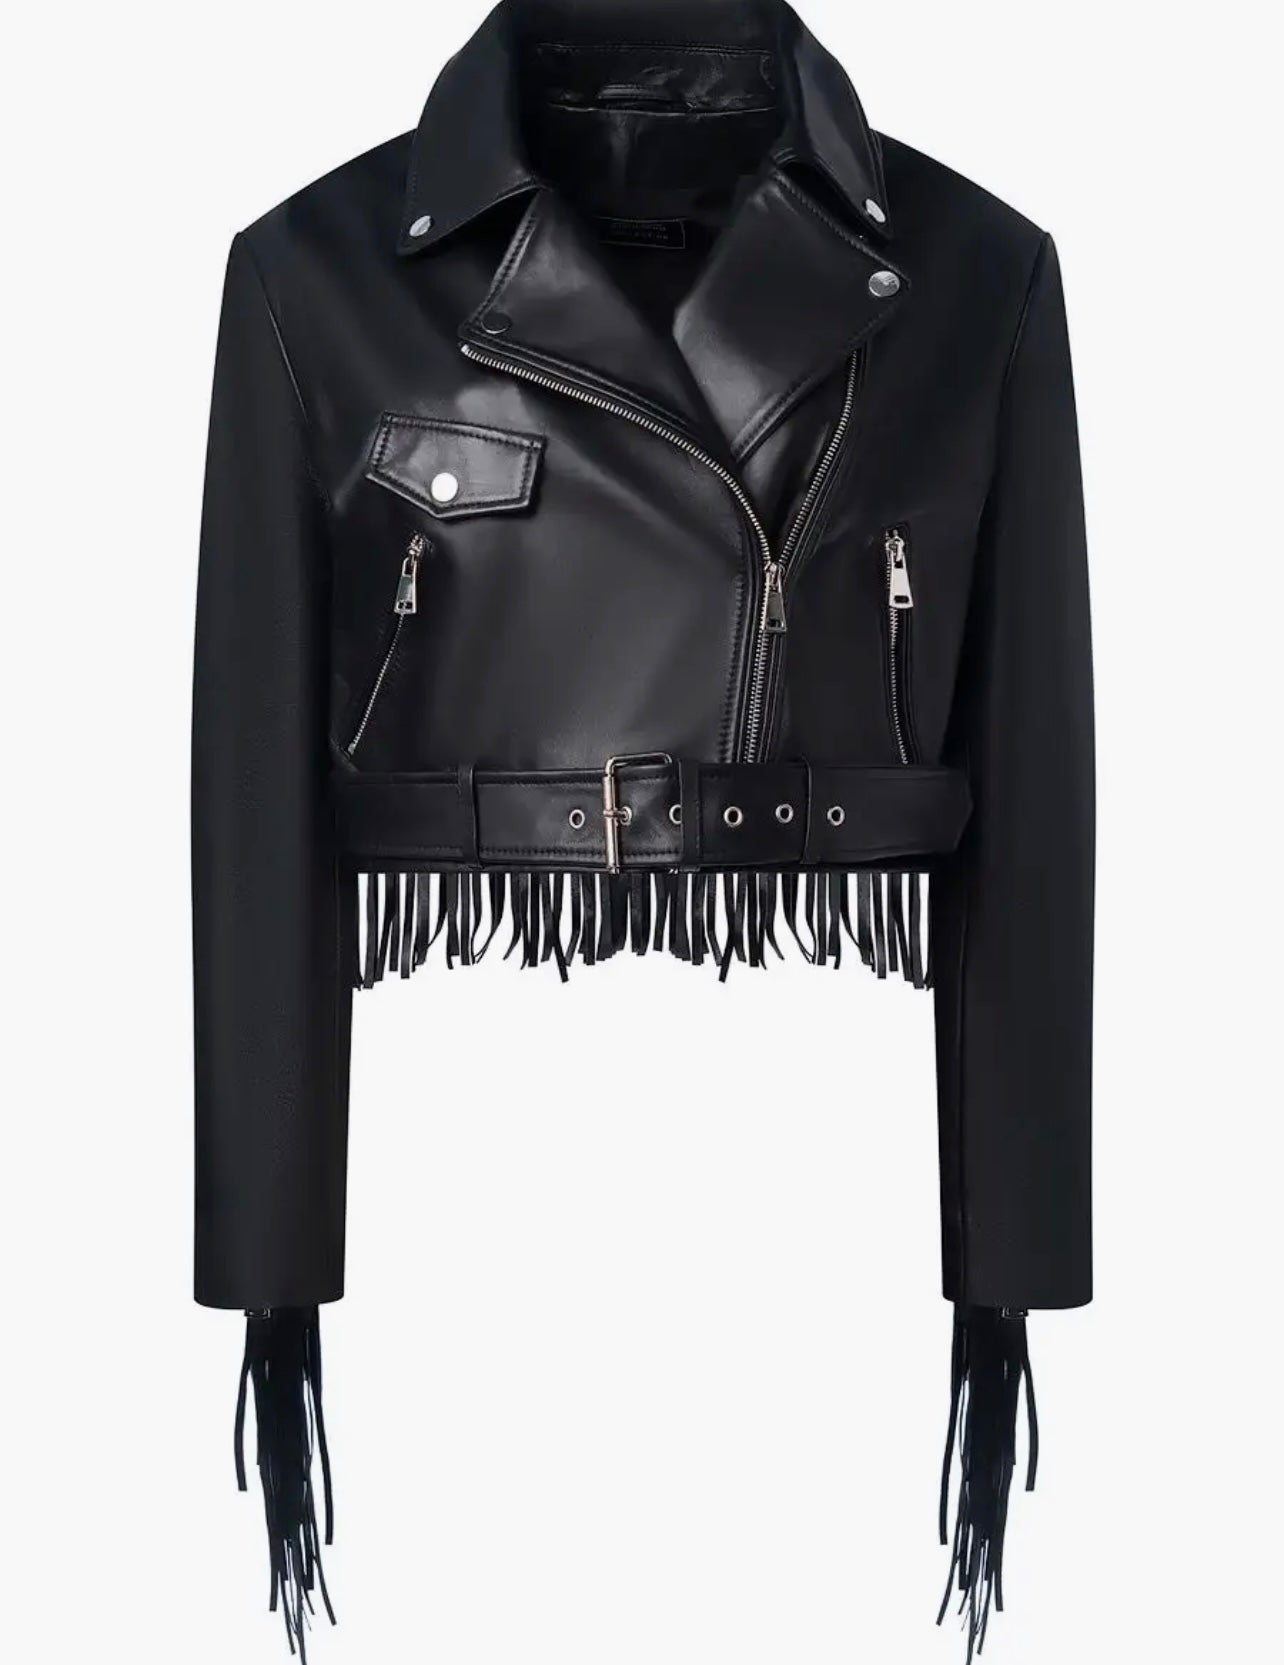 Black Leather Jacket with Fringes. Geaca din piele naturala cu franjuri